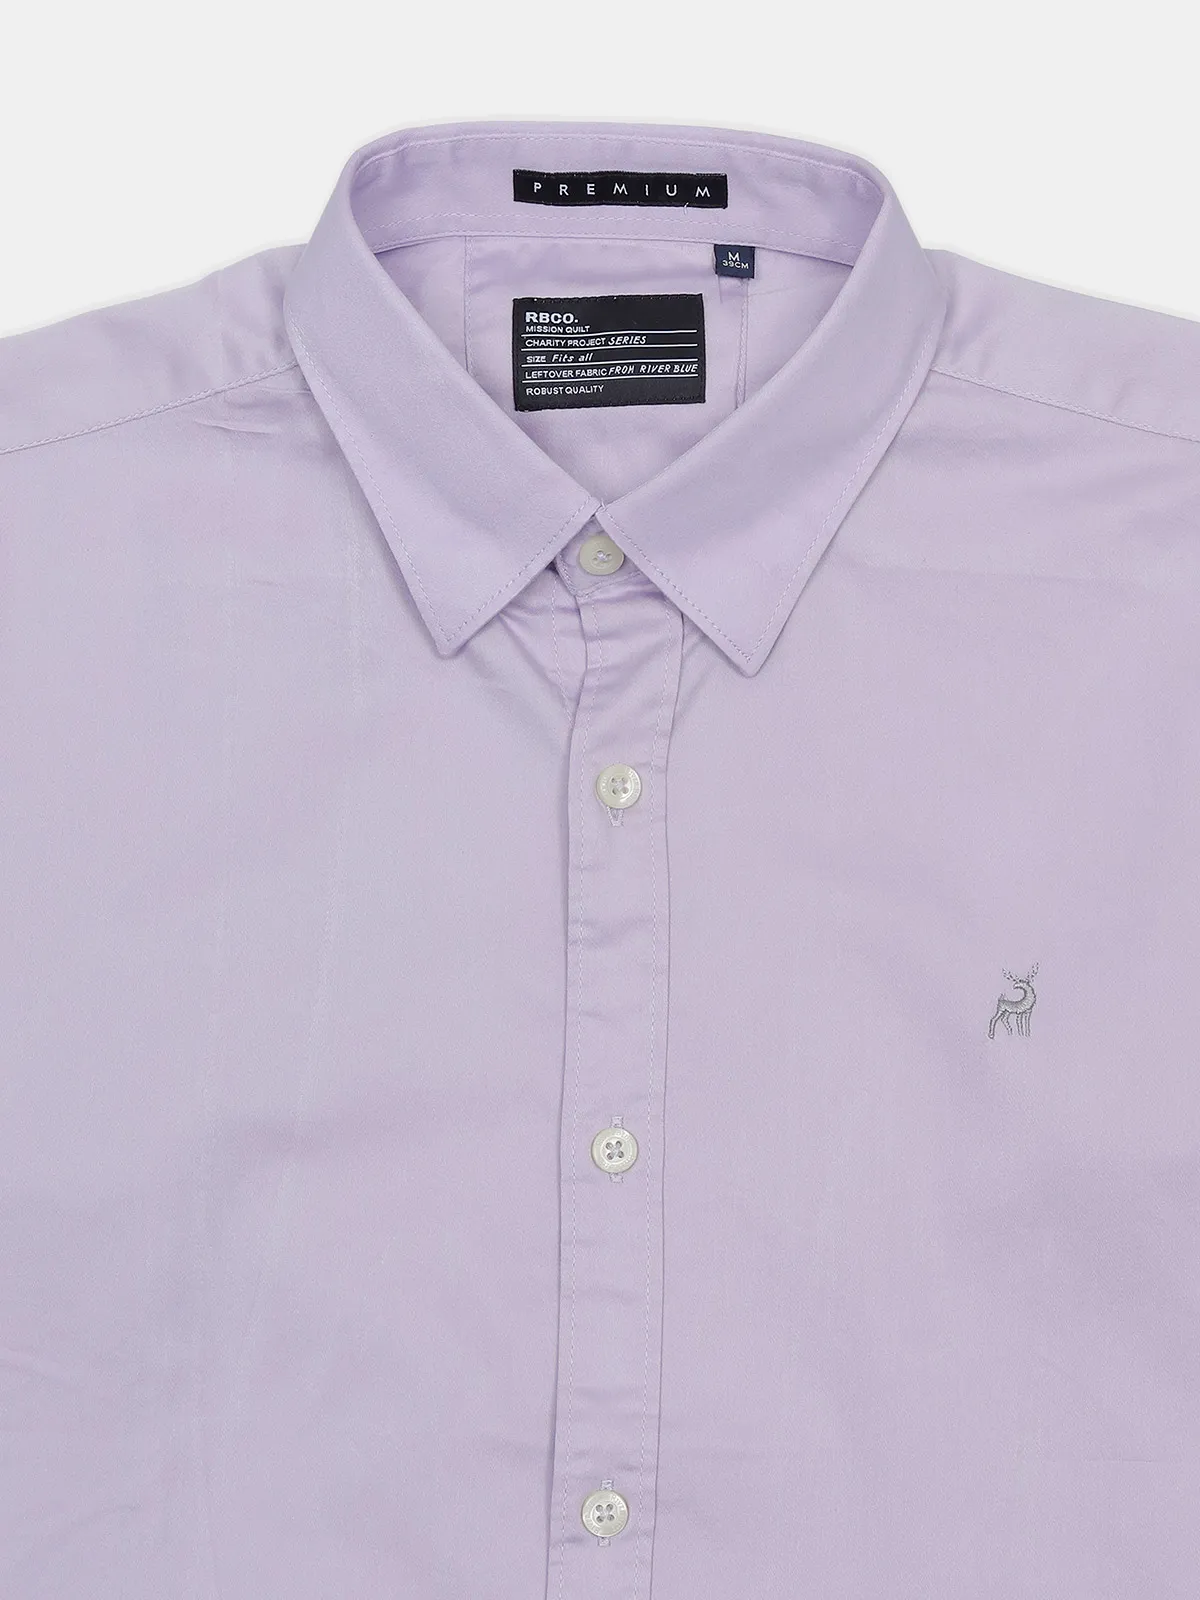 River Blue lilac purple cotton casual shirt